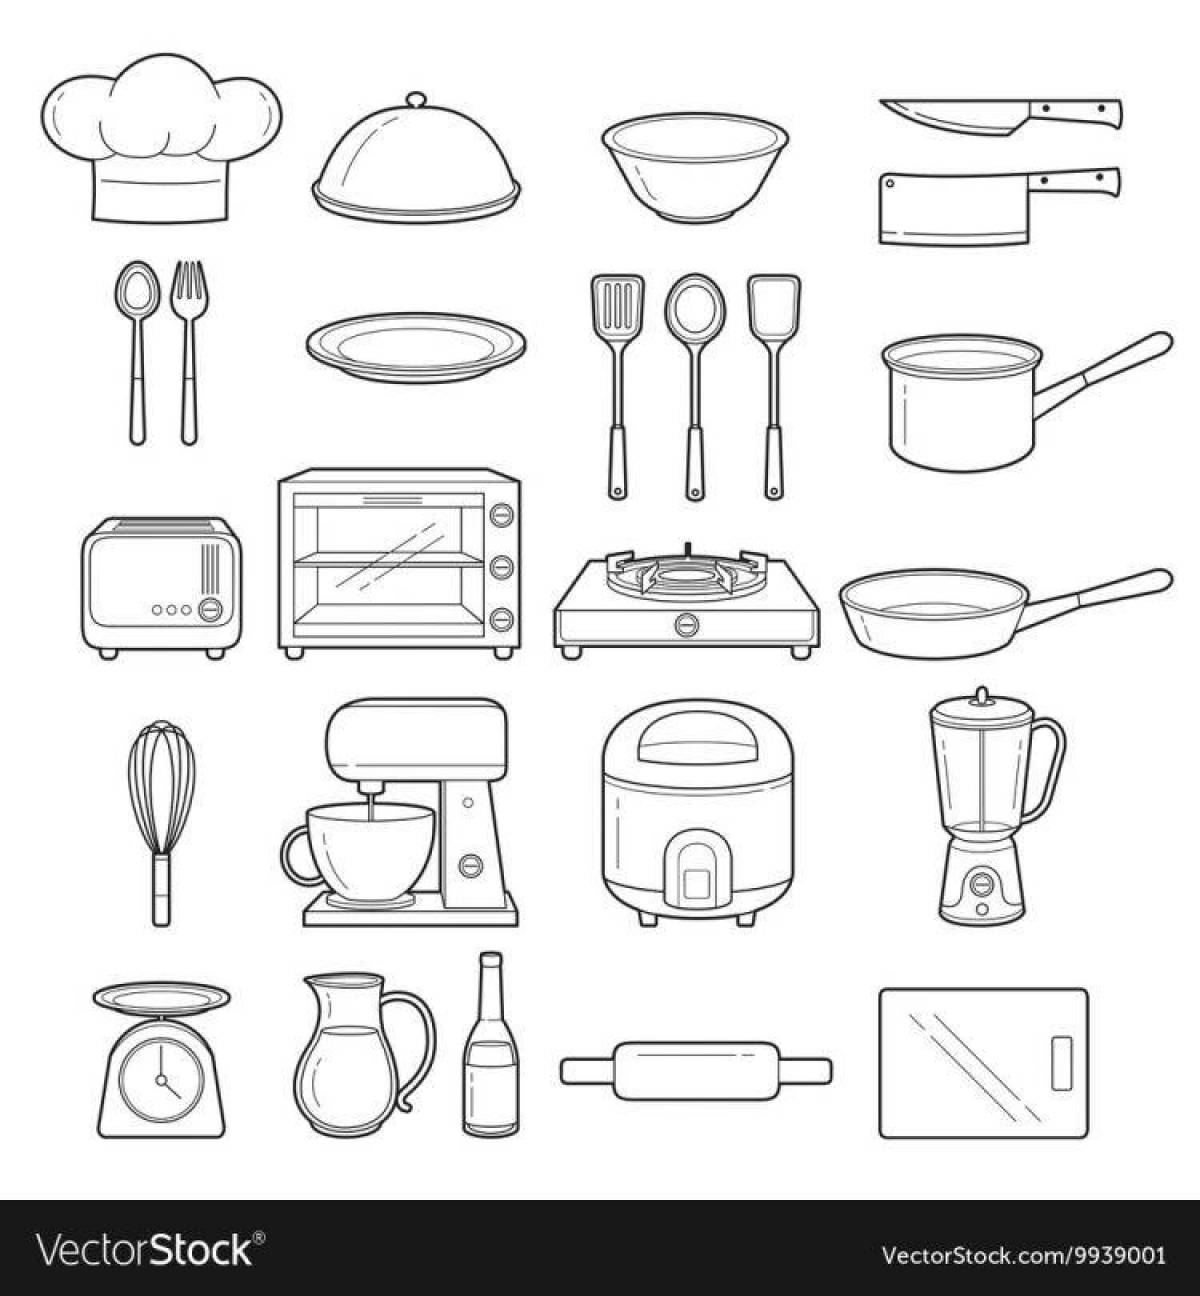 Kitchen appliances #4